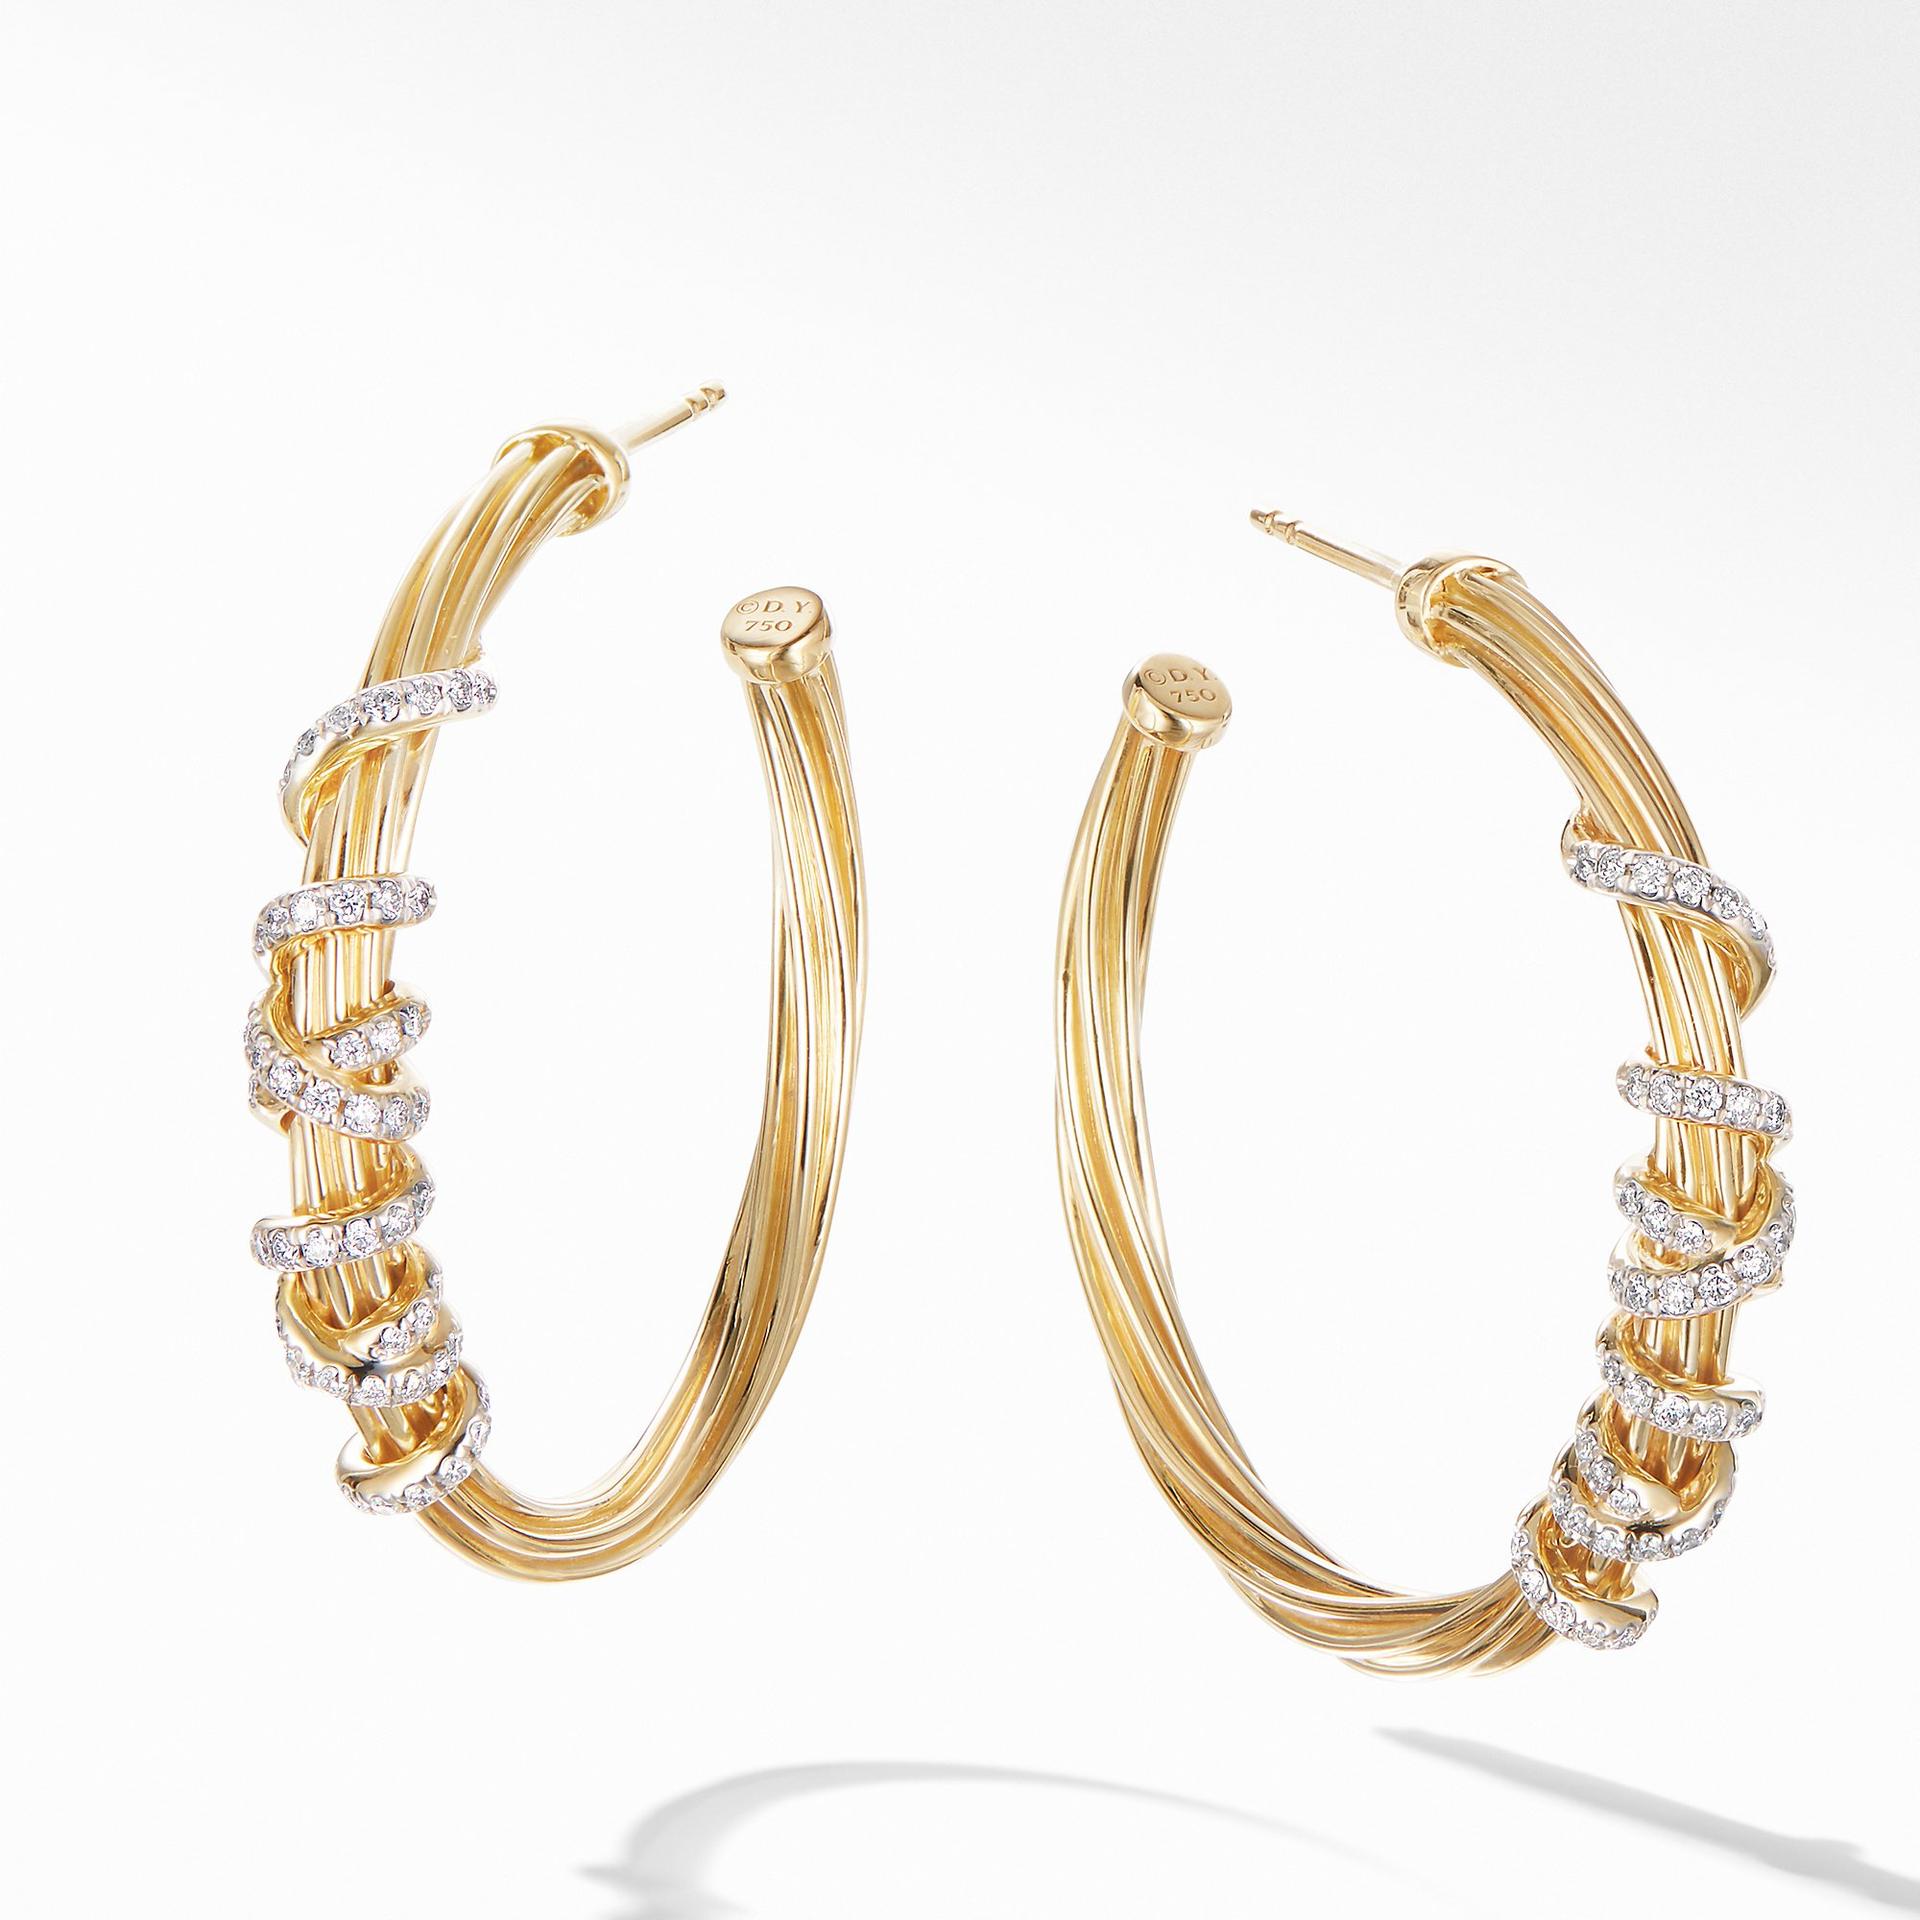 David Yurman Helena Large Hoop Earring in 18K Yellow Gold with Diamonds 0